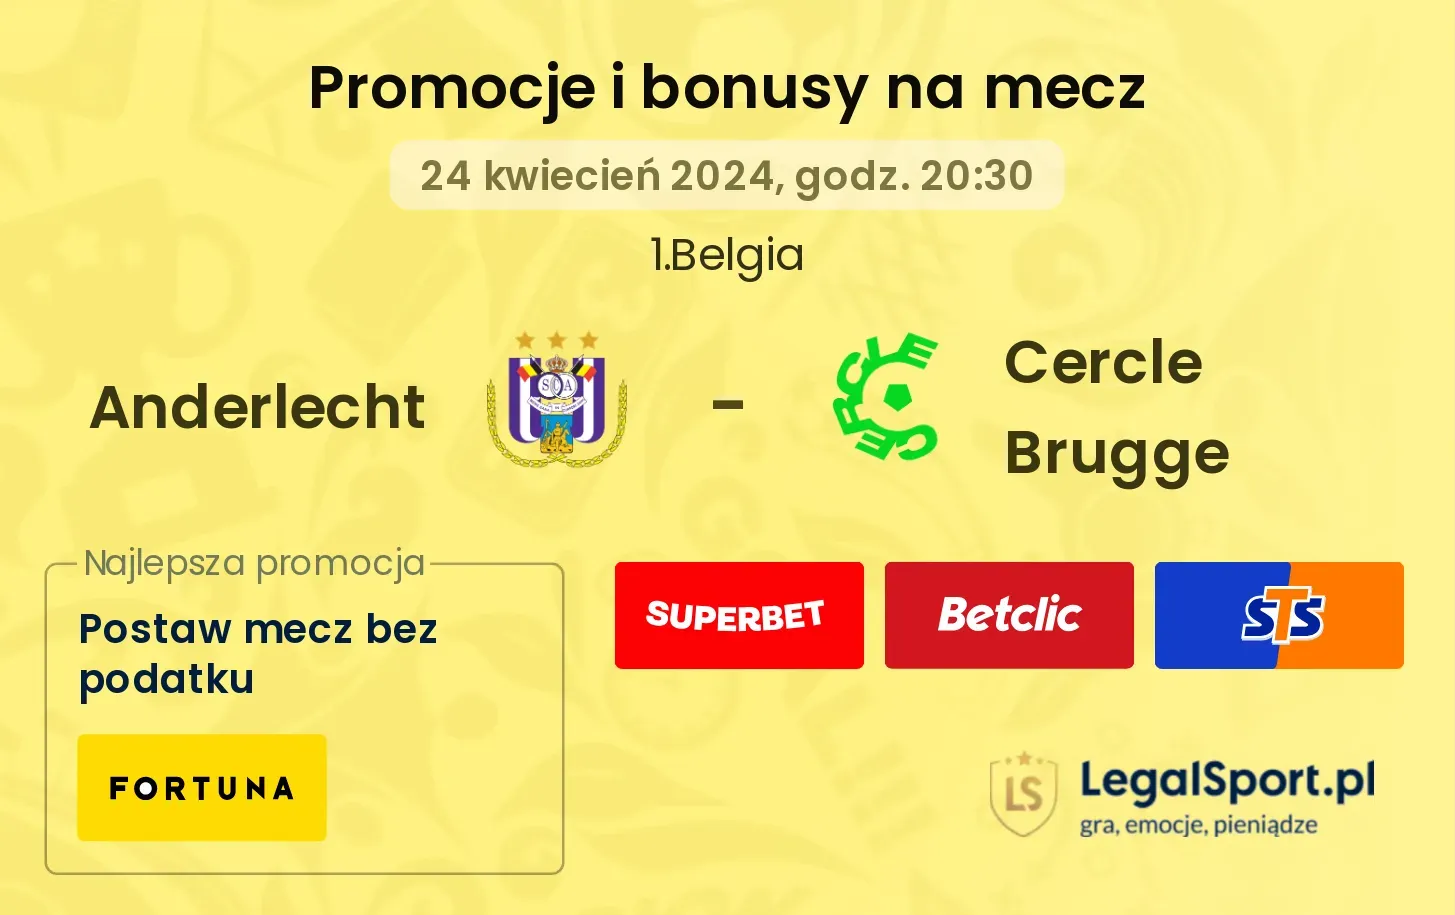 Anderlecht - Cercle Brugge promocje bonusy na mecz